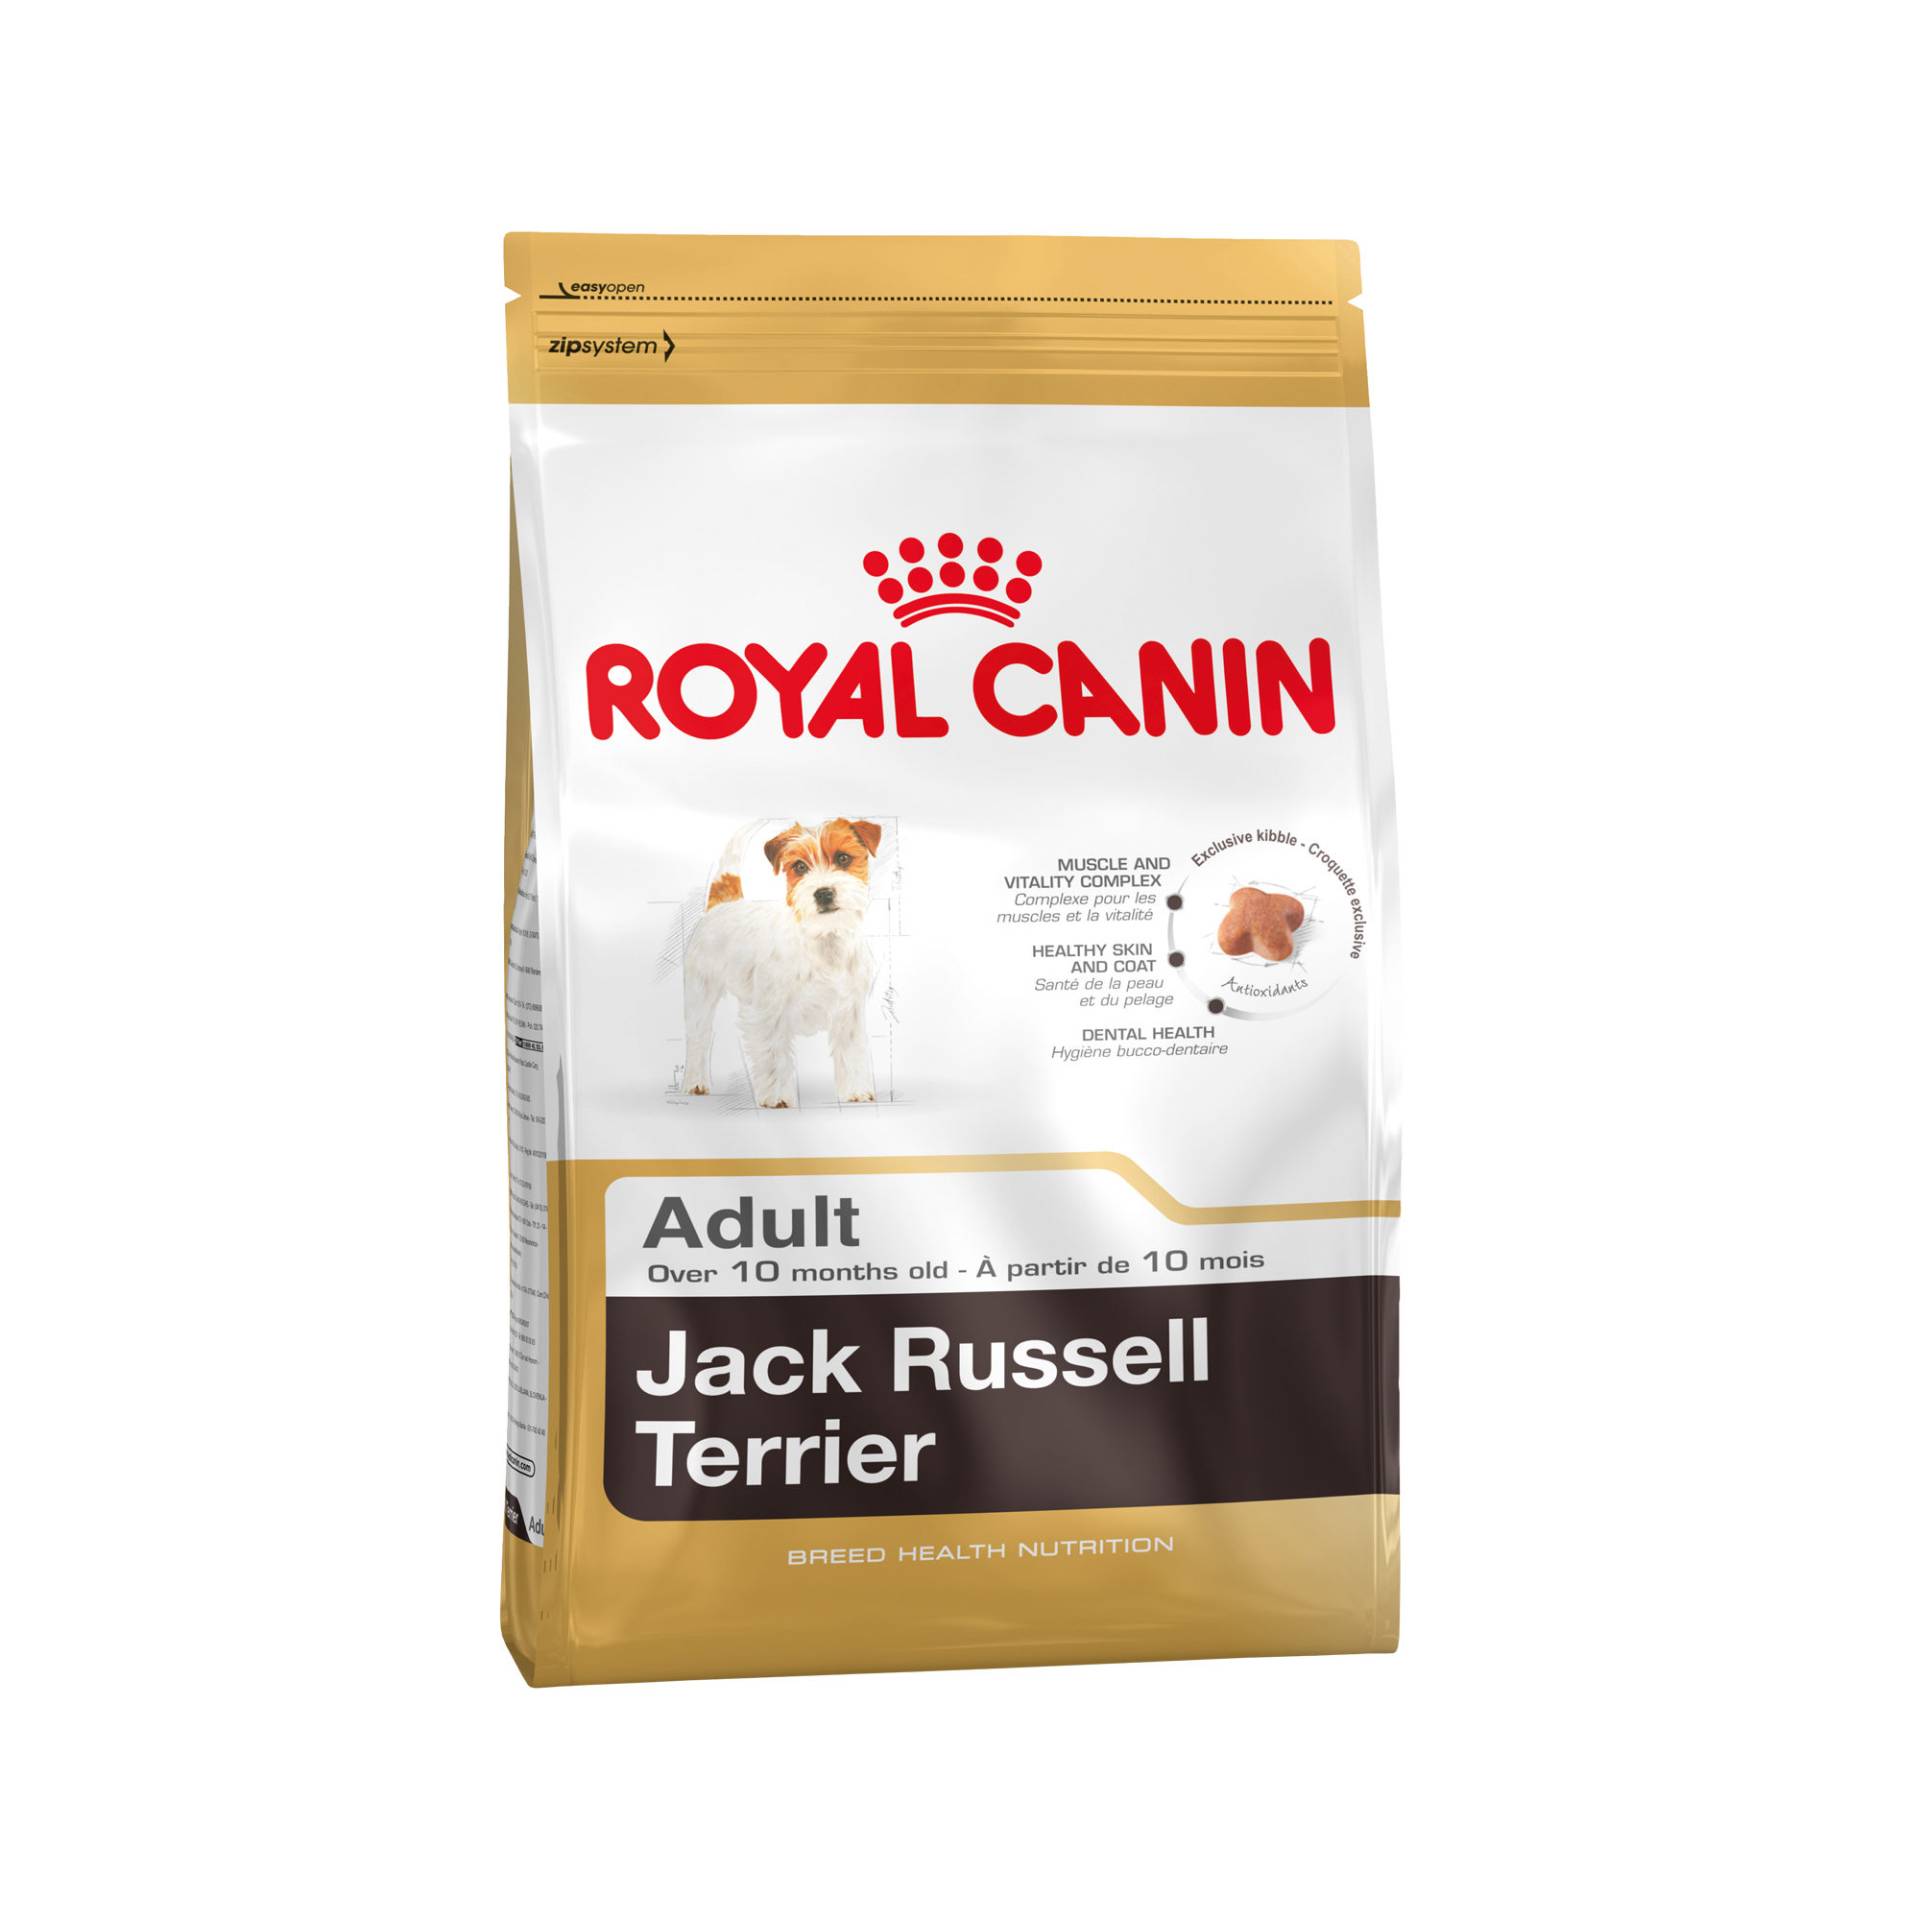 Royal Canin Jack Russell Terrier Adult Hundefutter - 3 kg von Royal Canin